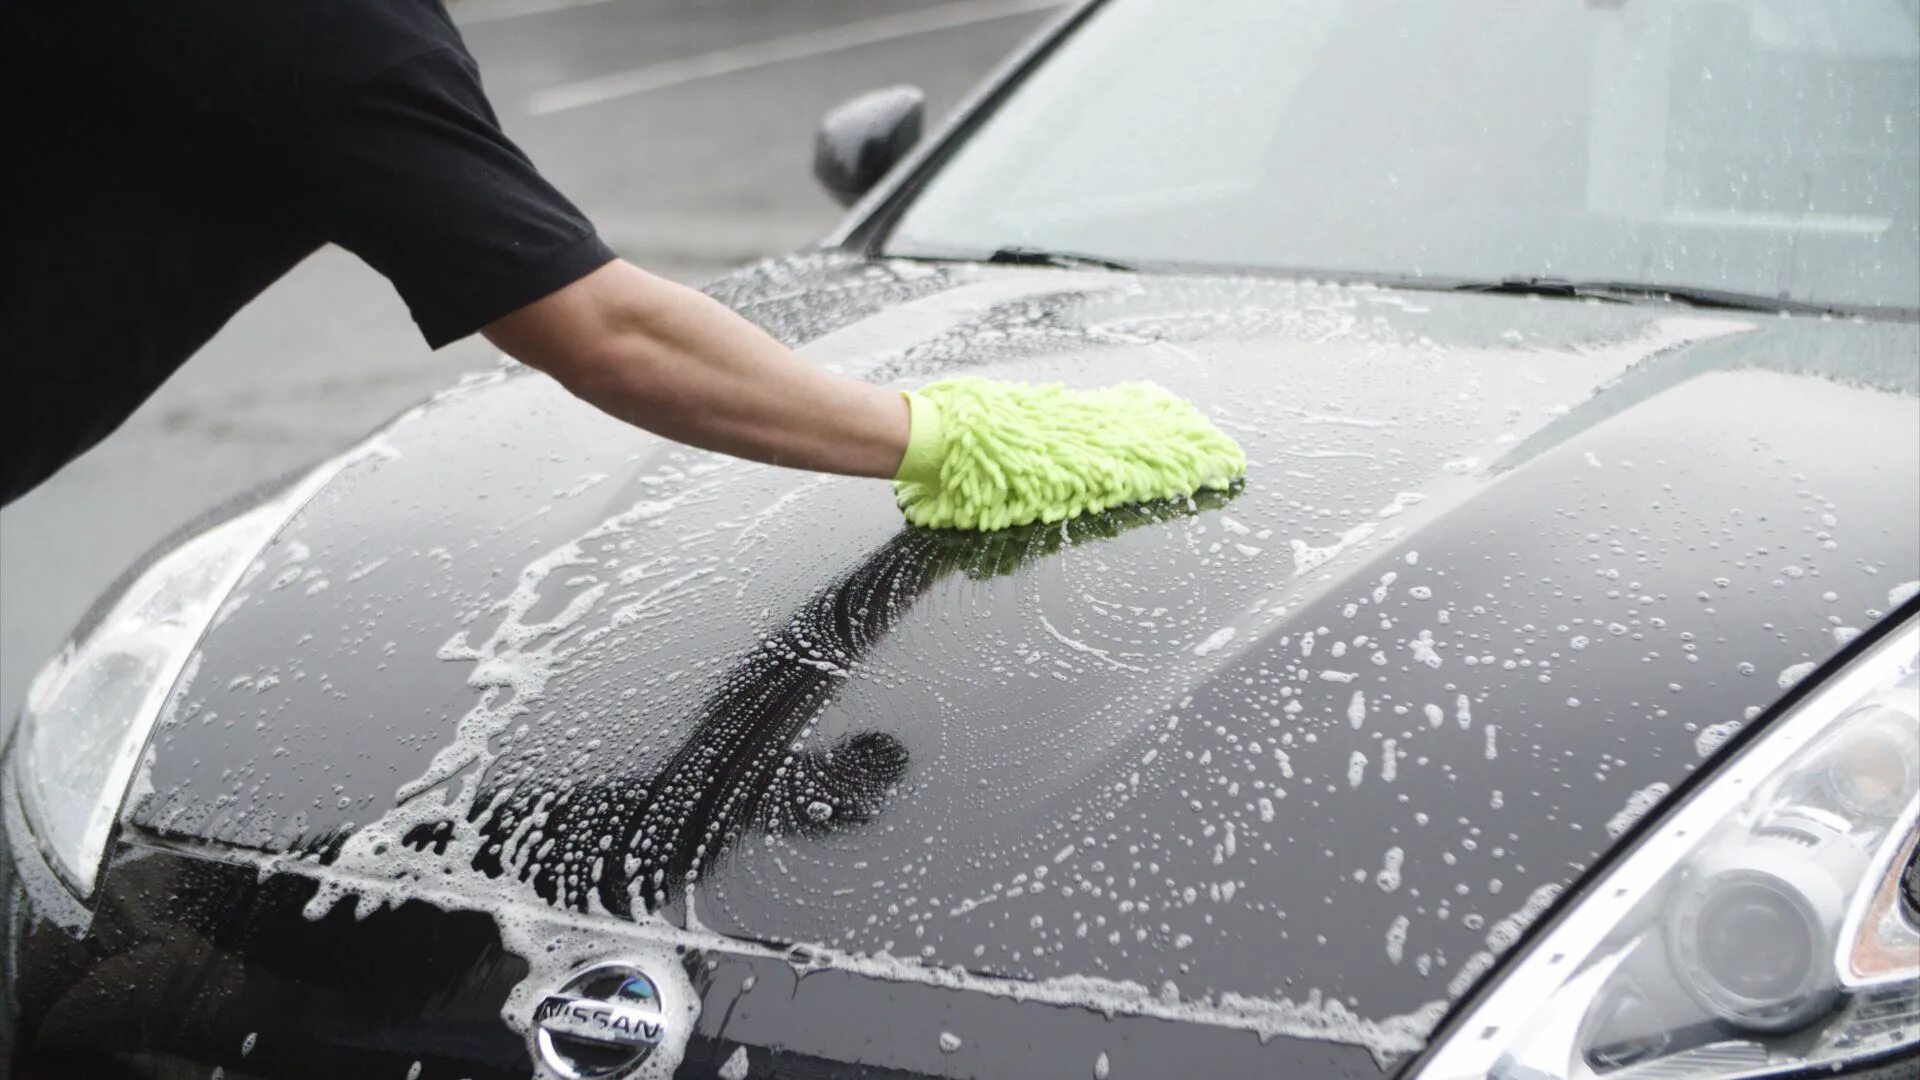 I have my car washed. Clean car автомойка. Полировка авто. Фон для автомойки. Вода автомойка.